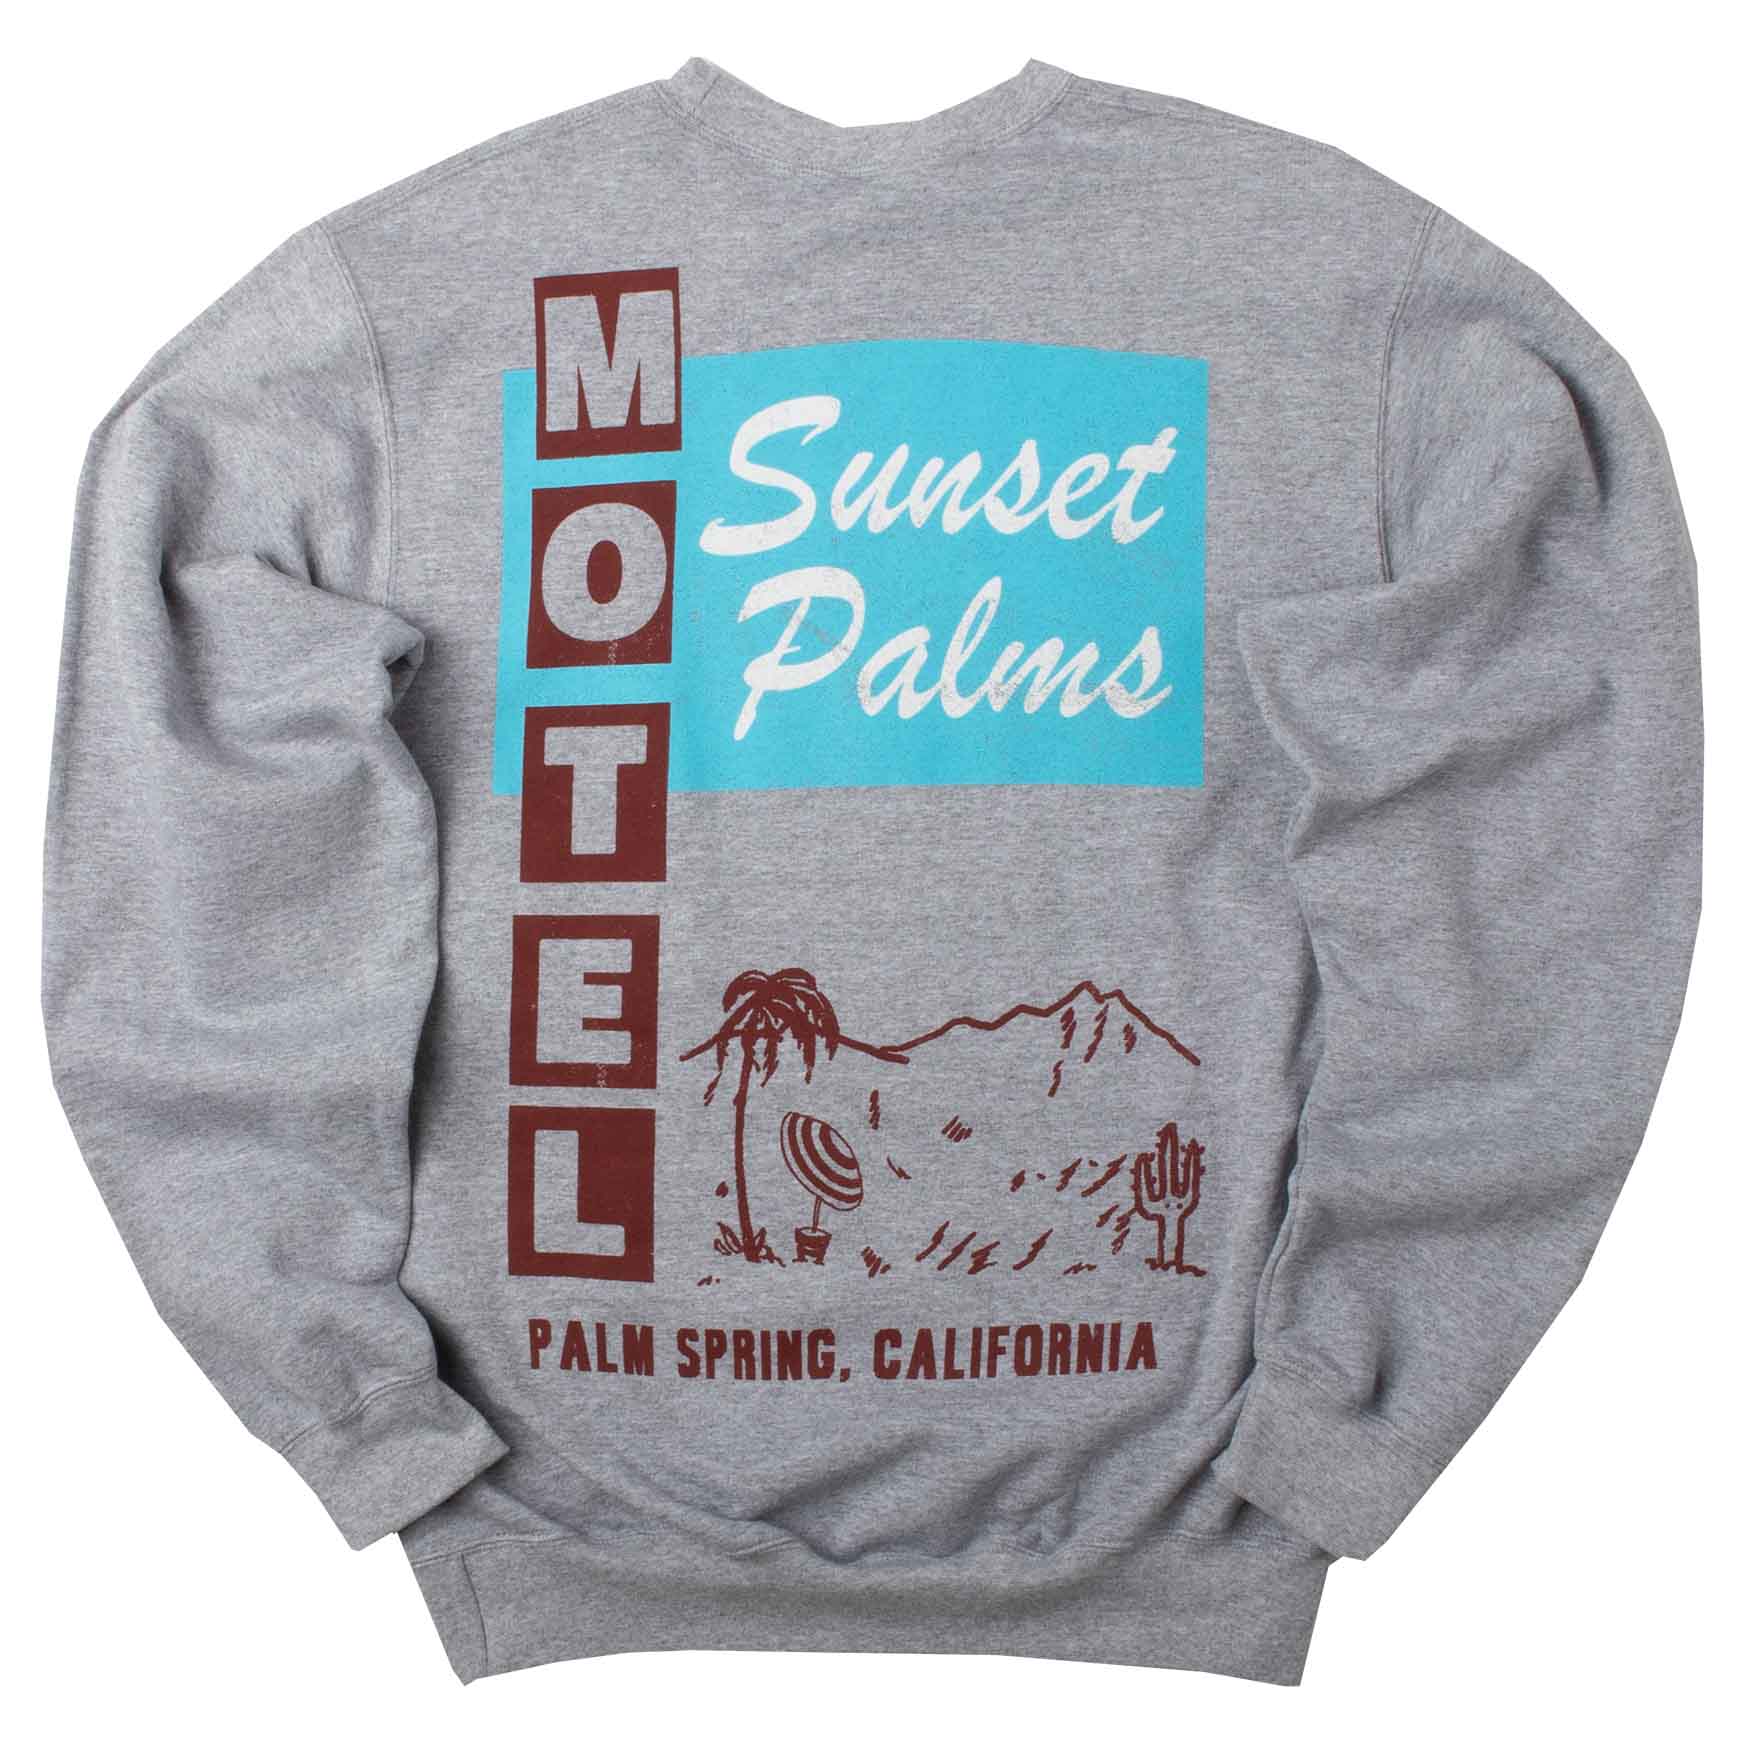 Sunset Palms Motel sweatshirt